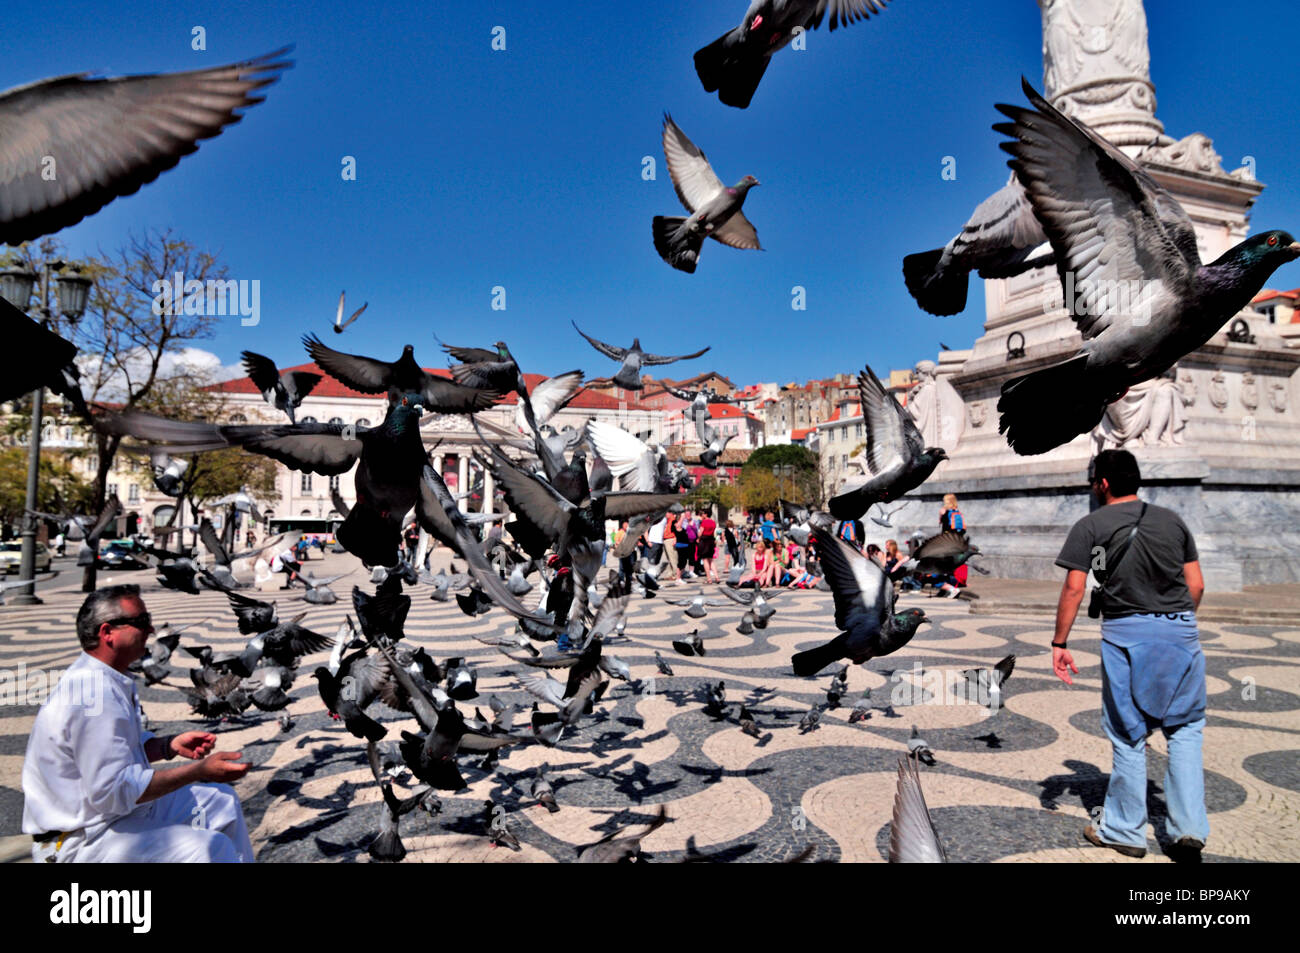 Portugal, Lisbon: Man feeding pigeons at Rossio Square Stock Photo